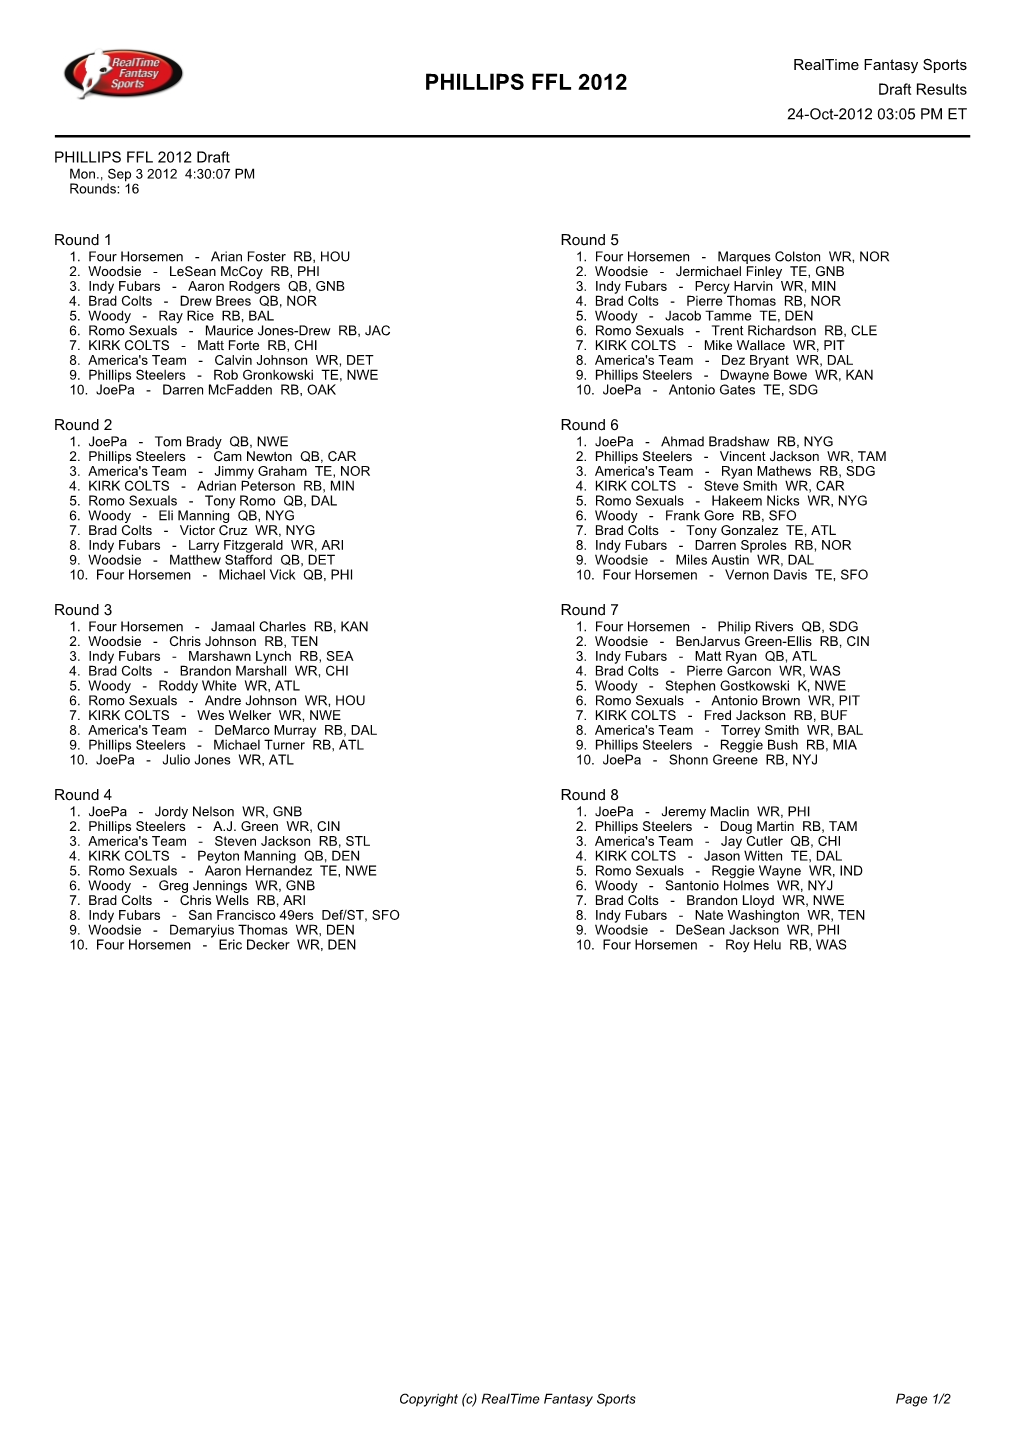 PHILLIPS FFL 2012 Draft Results 24-Oct-2012 03:05 PM ET